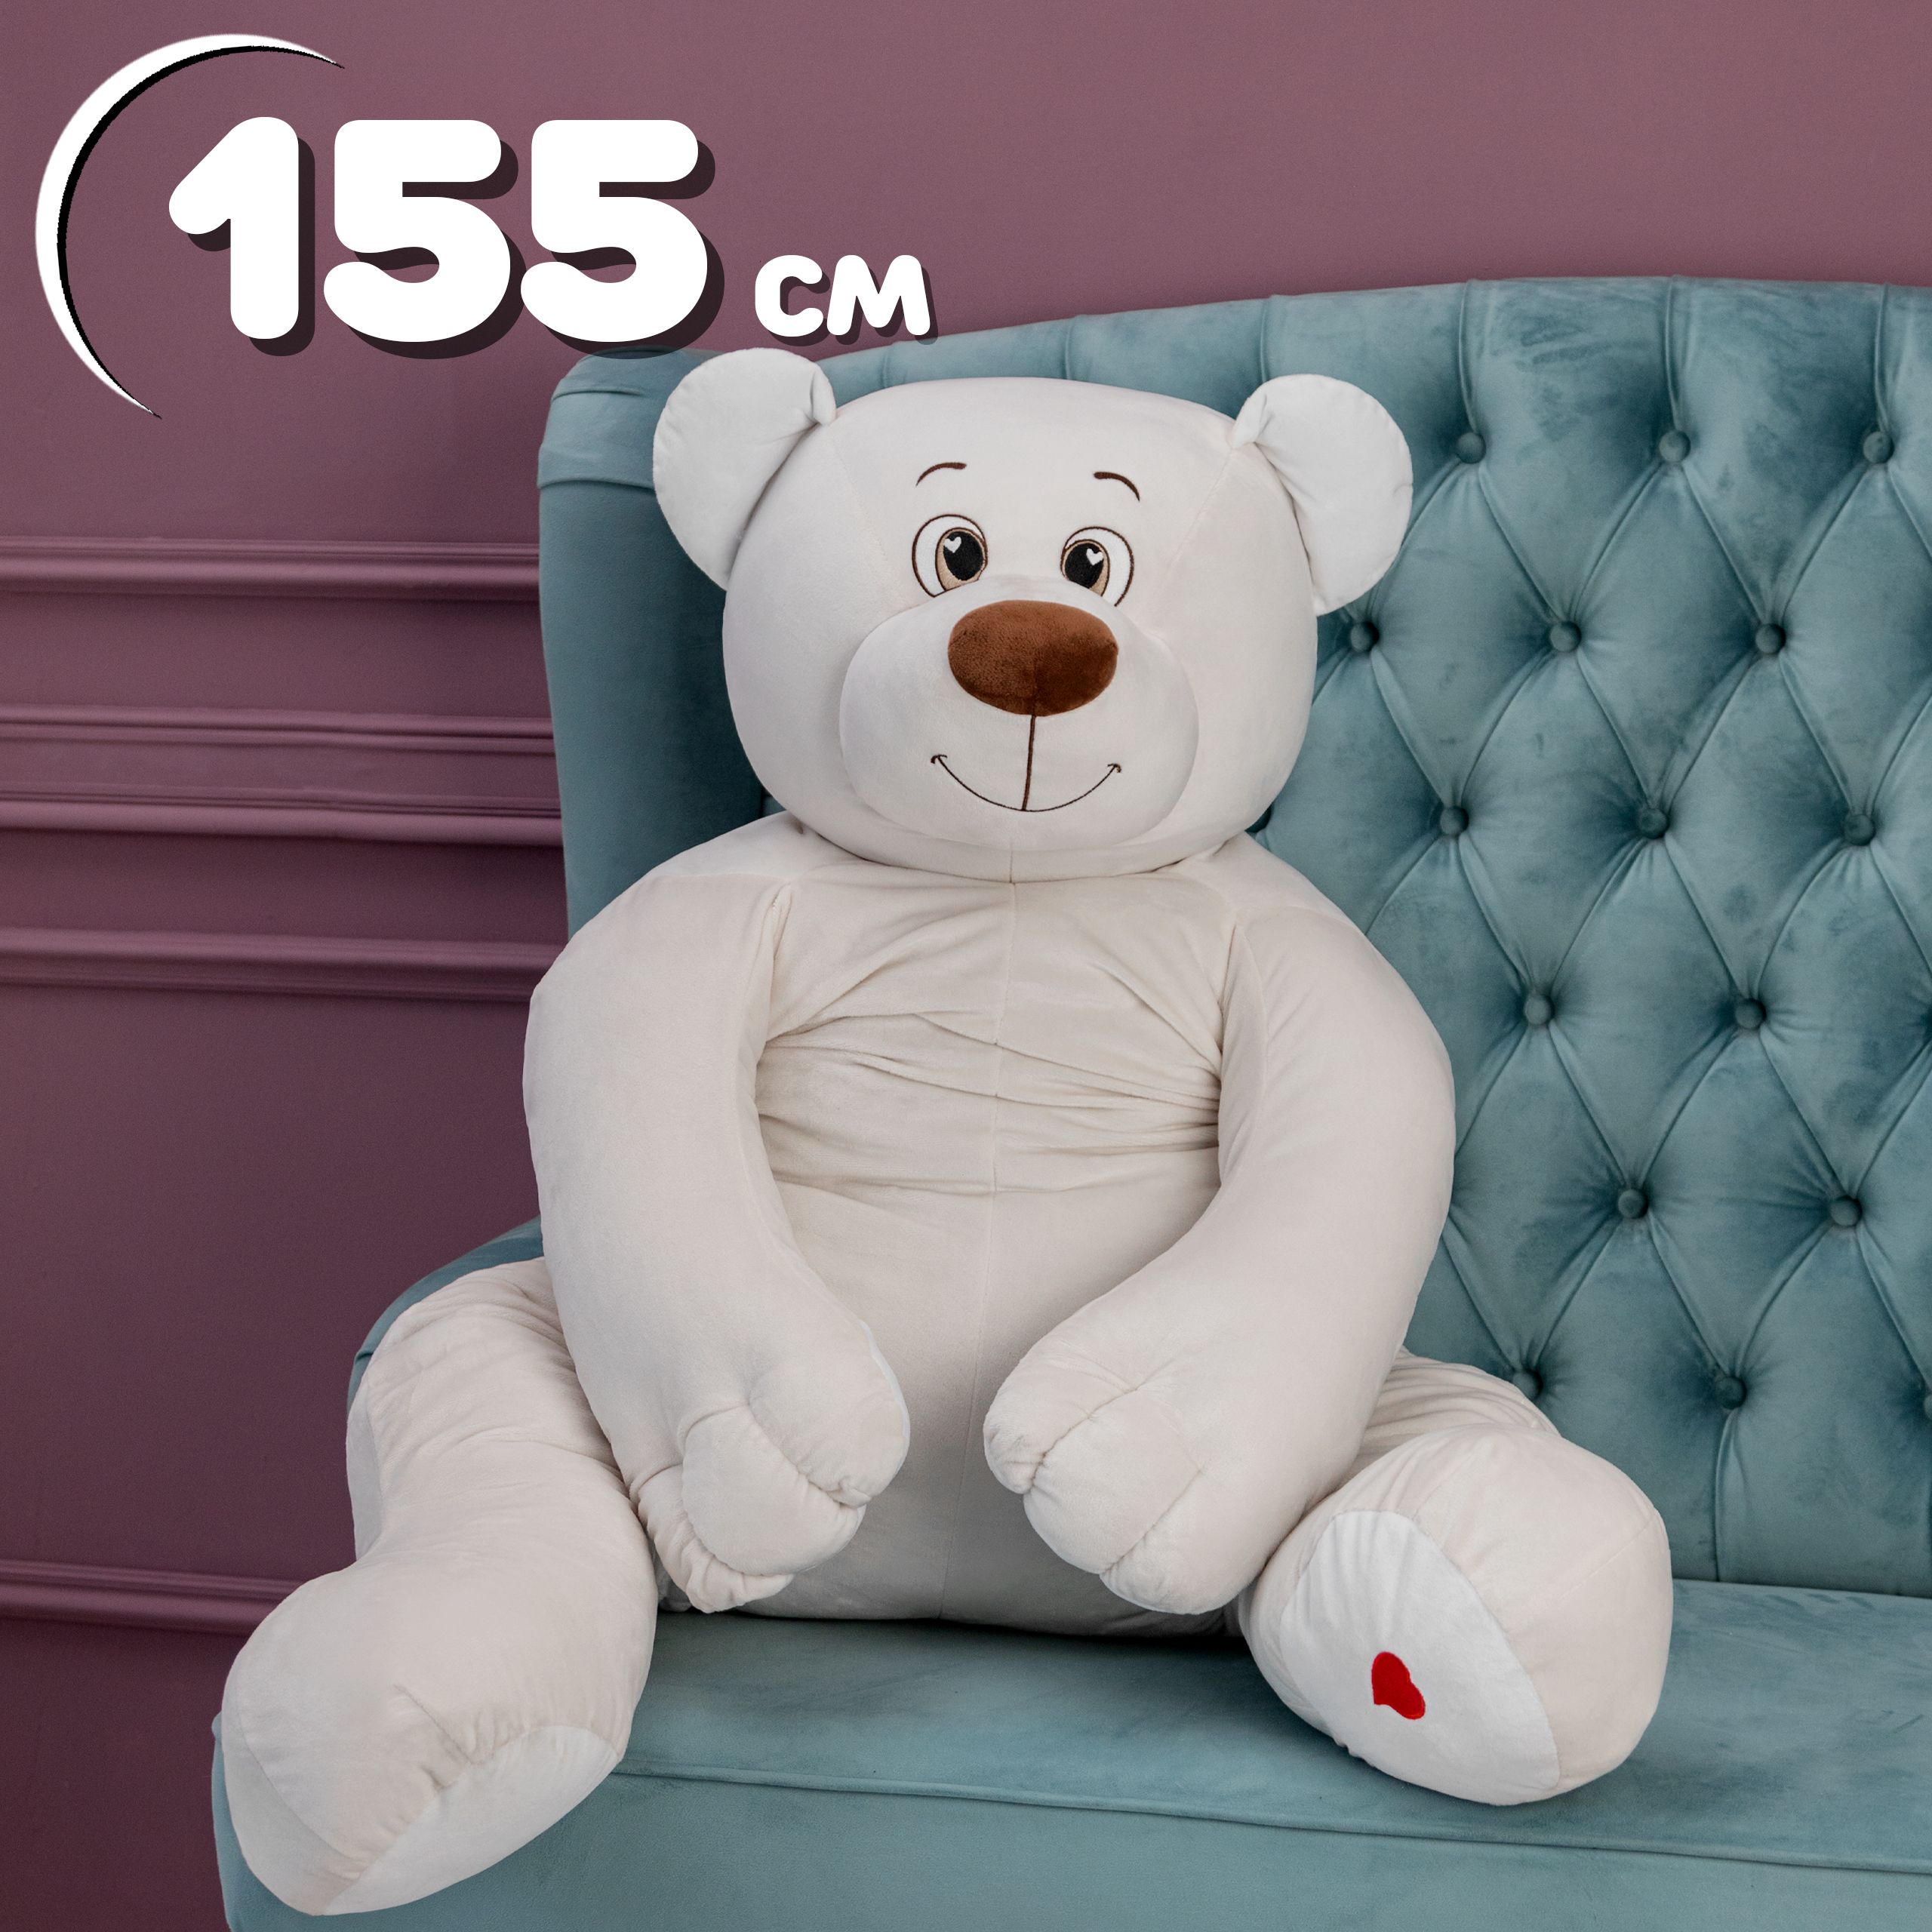 Мягкая игрушка Kult of toys Медведь Лари 155 см бежевый мягкая игрушка abtoys super soft медведь бежевый 45 см